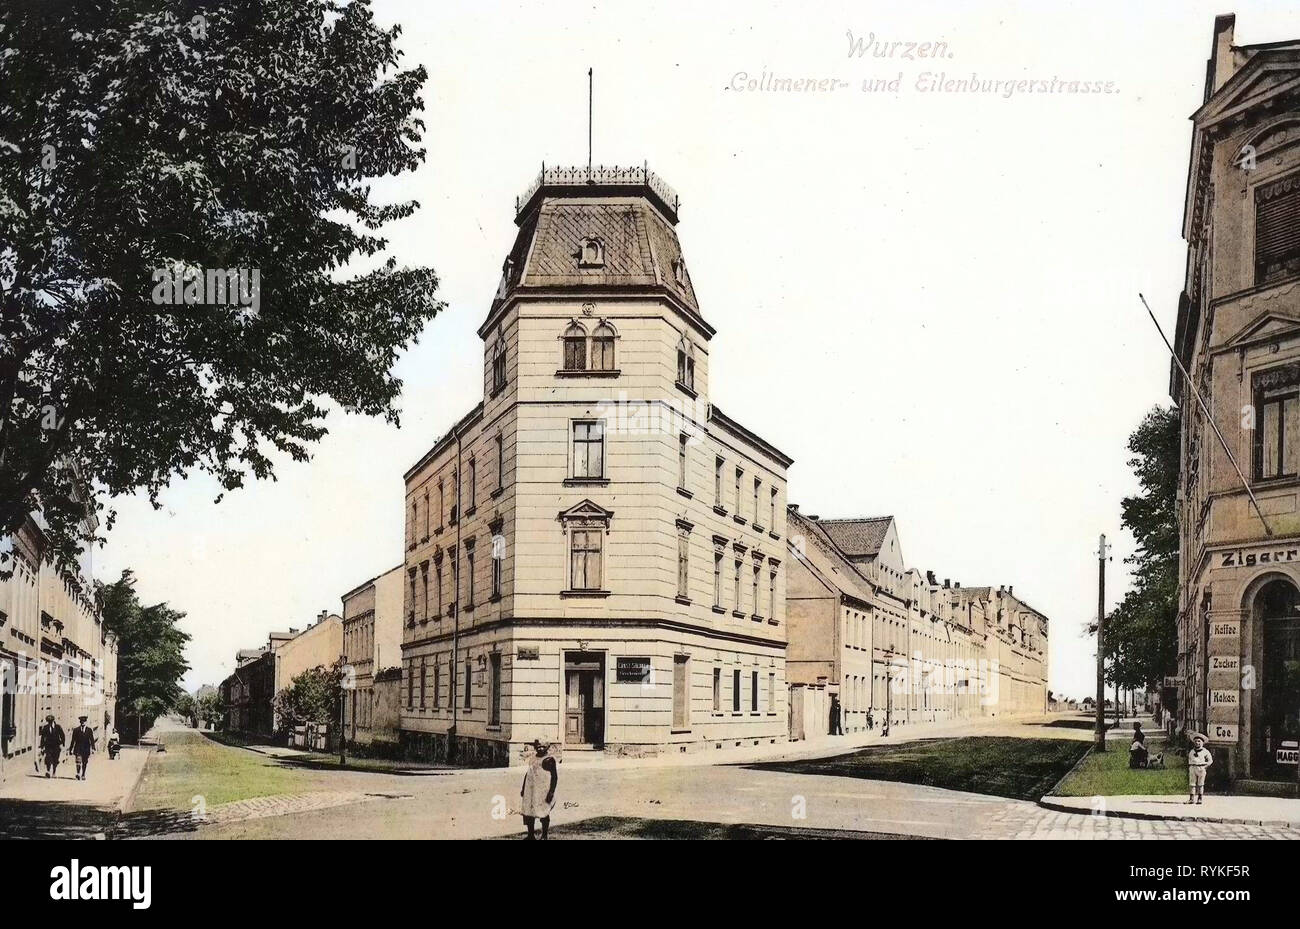 Buildings in Wurzen, Tobacco shops in Germany, 1915, Landkreis Leipzig, Wurzen, Collmener, und Eilenburger Straße Stock Photo